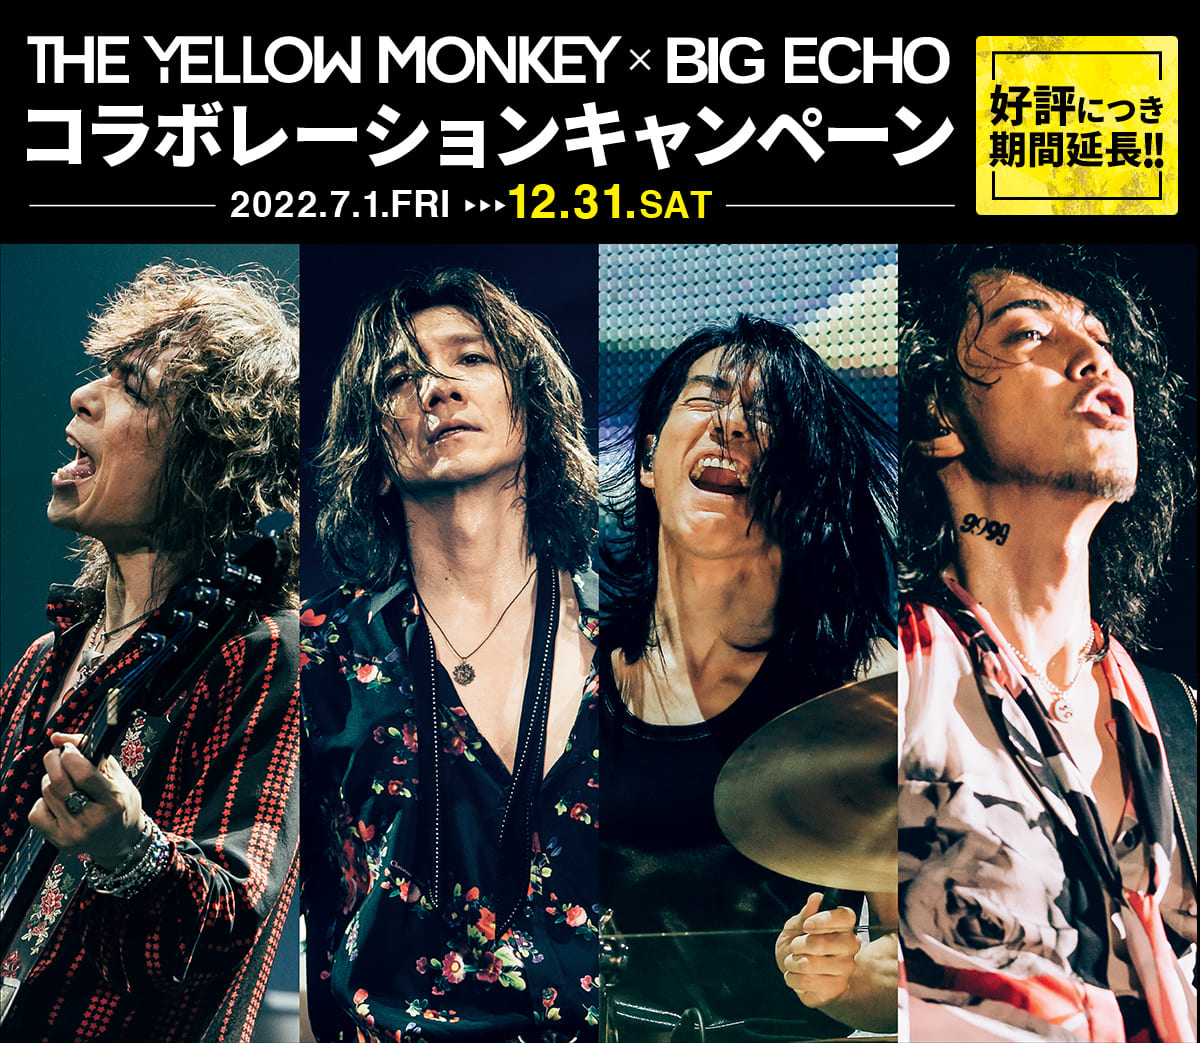 THE YELLOW MONKEY × BIG ECHO コラボレーションキャンペーン